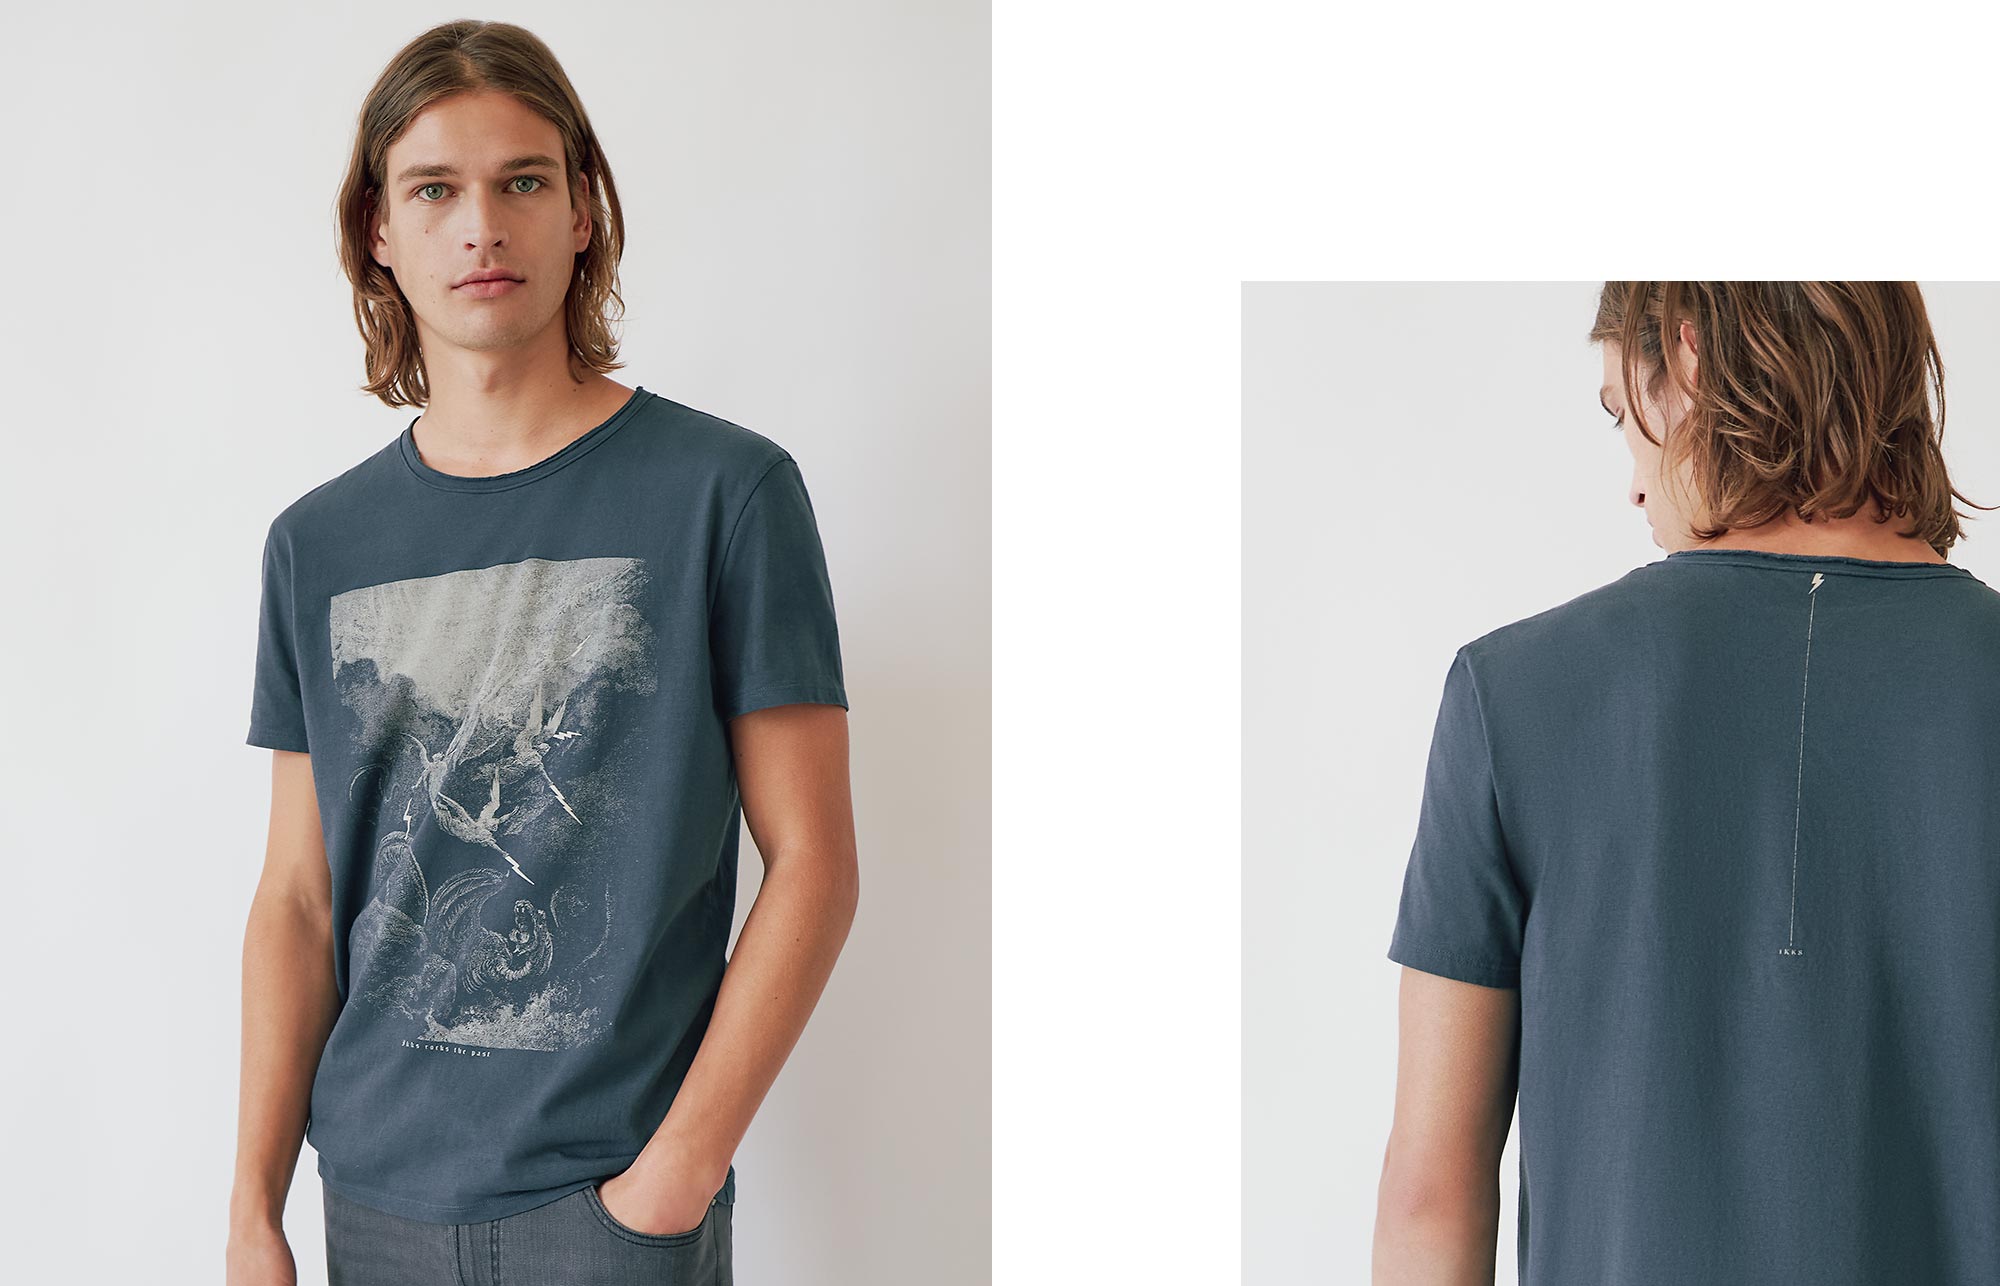 Stahlblaues Herren-T-Shirt mit Gravurmotiv